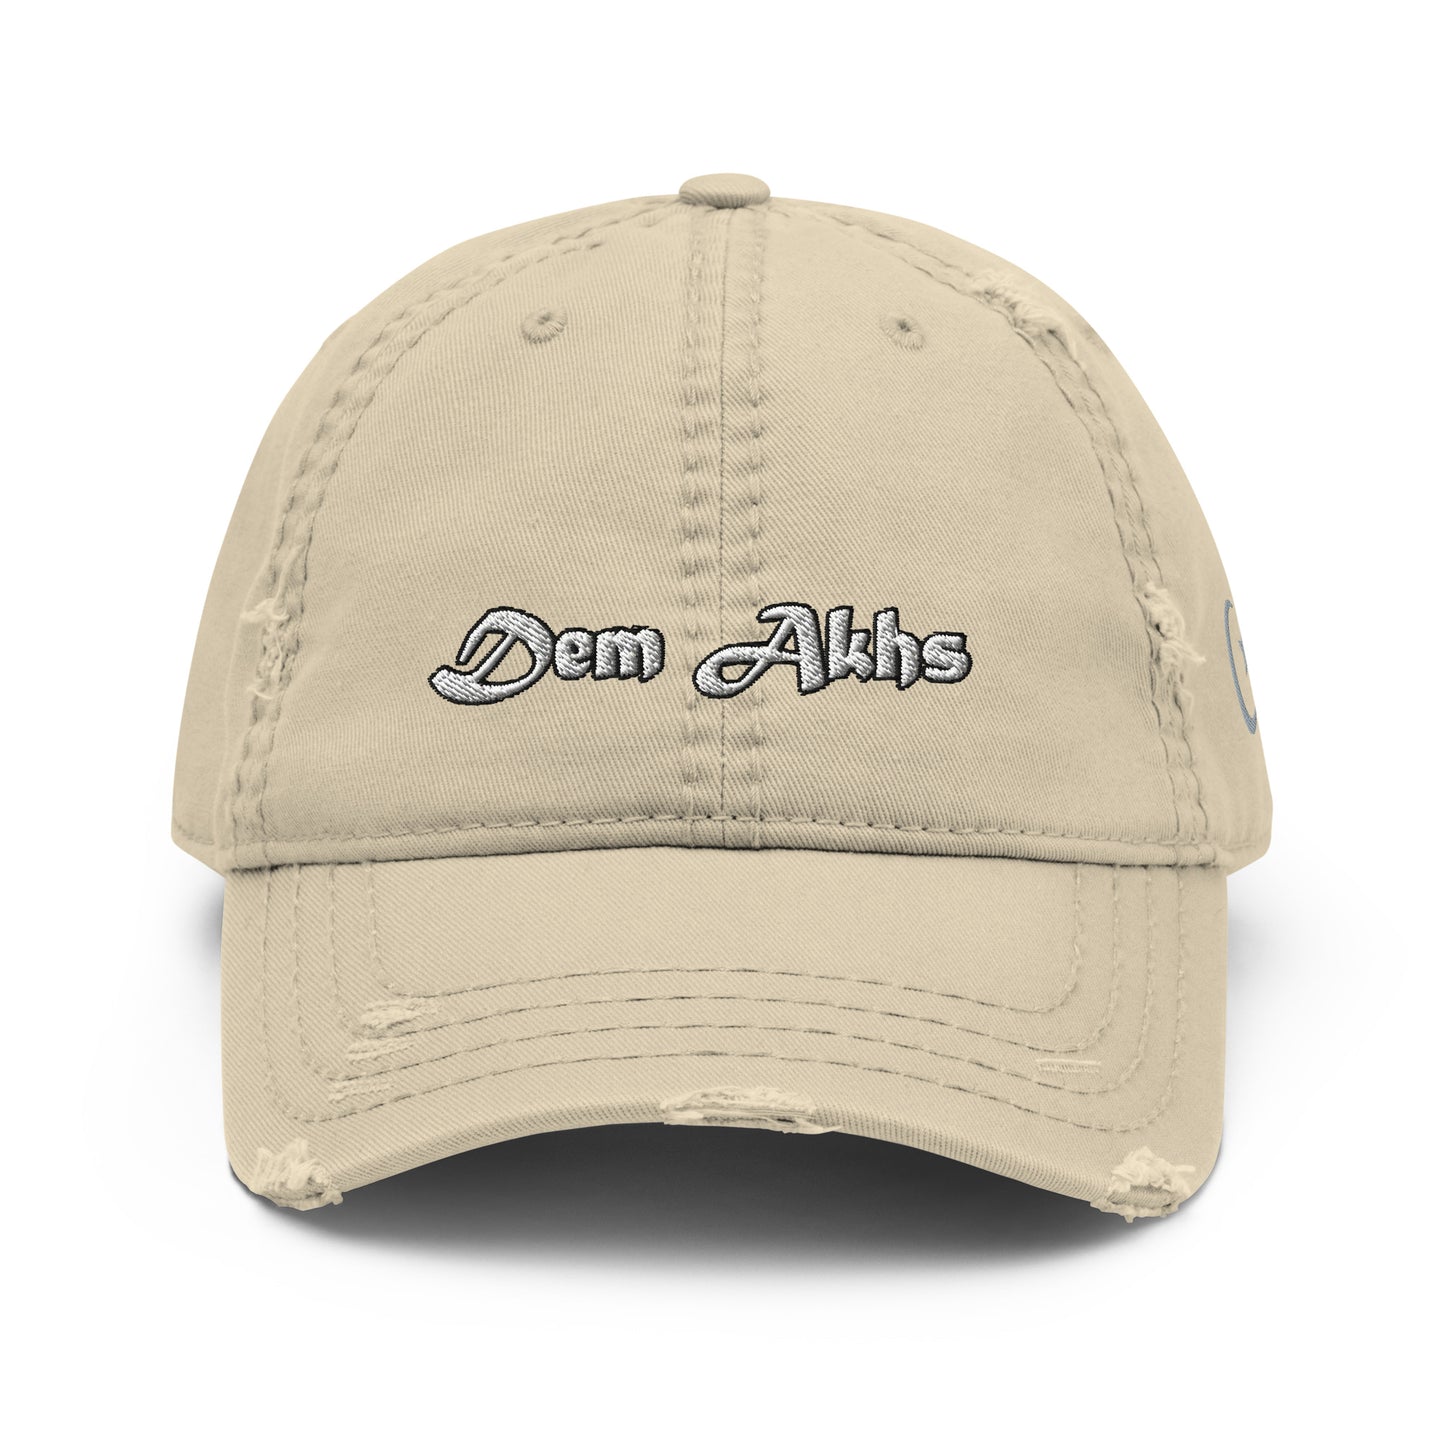 Dem Akhs Distressed Dad Hat